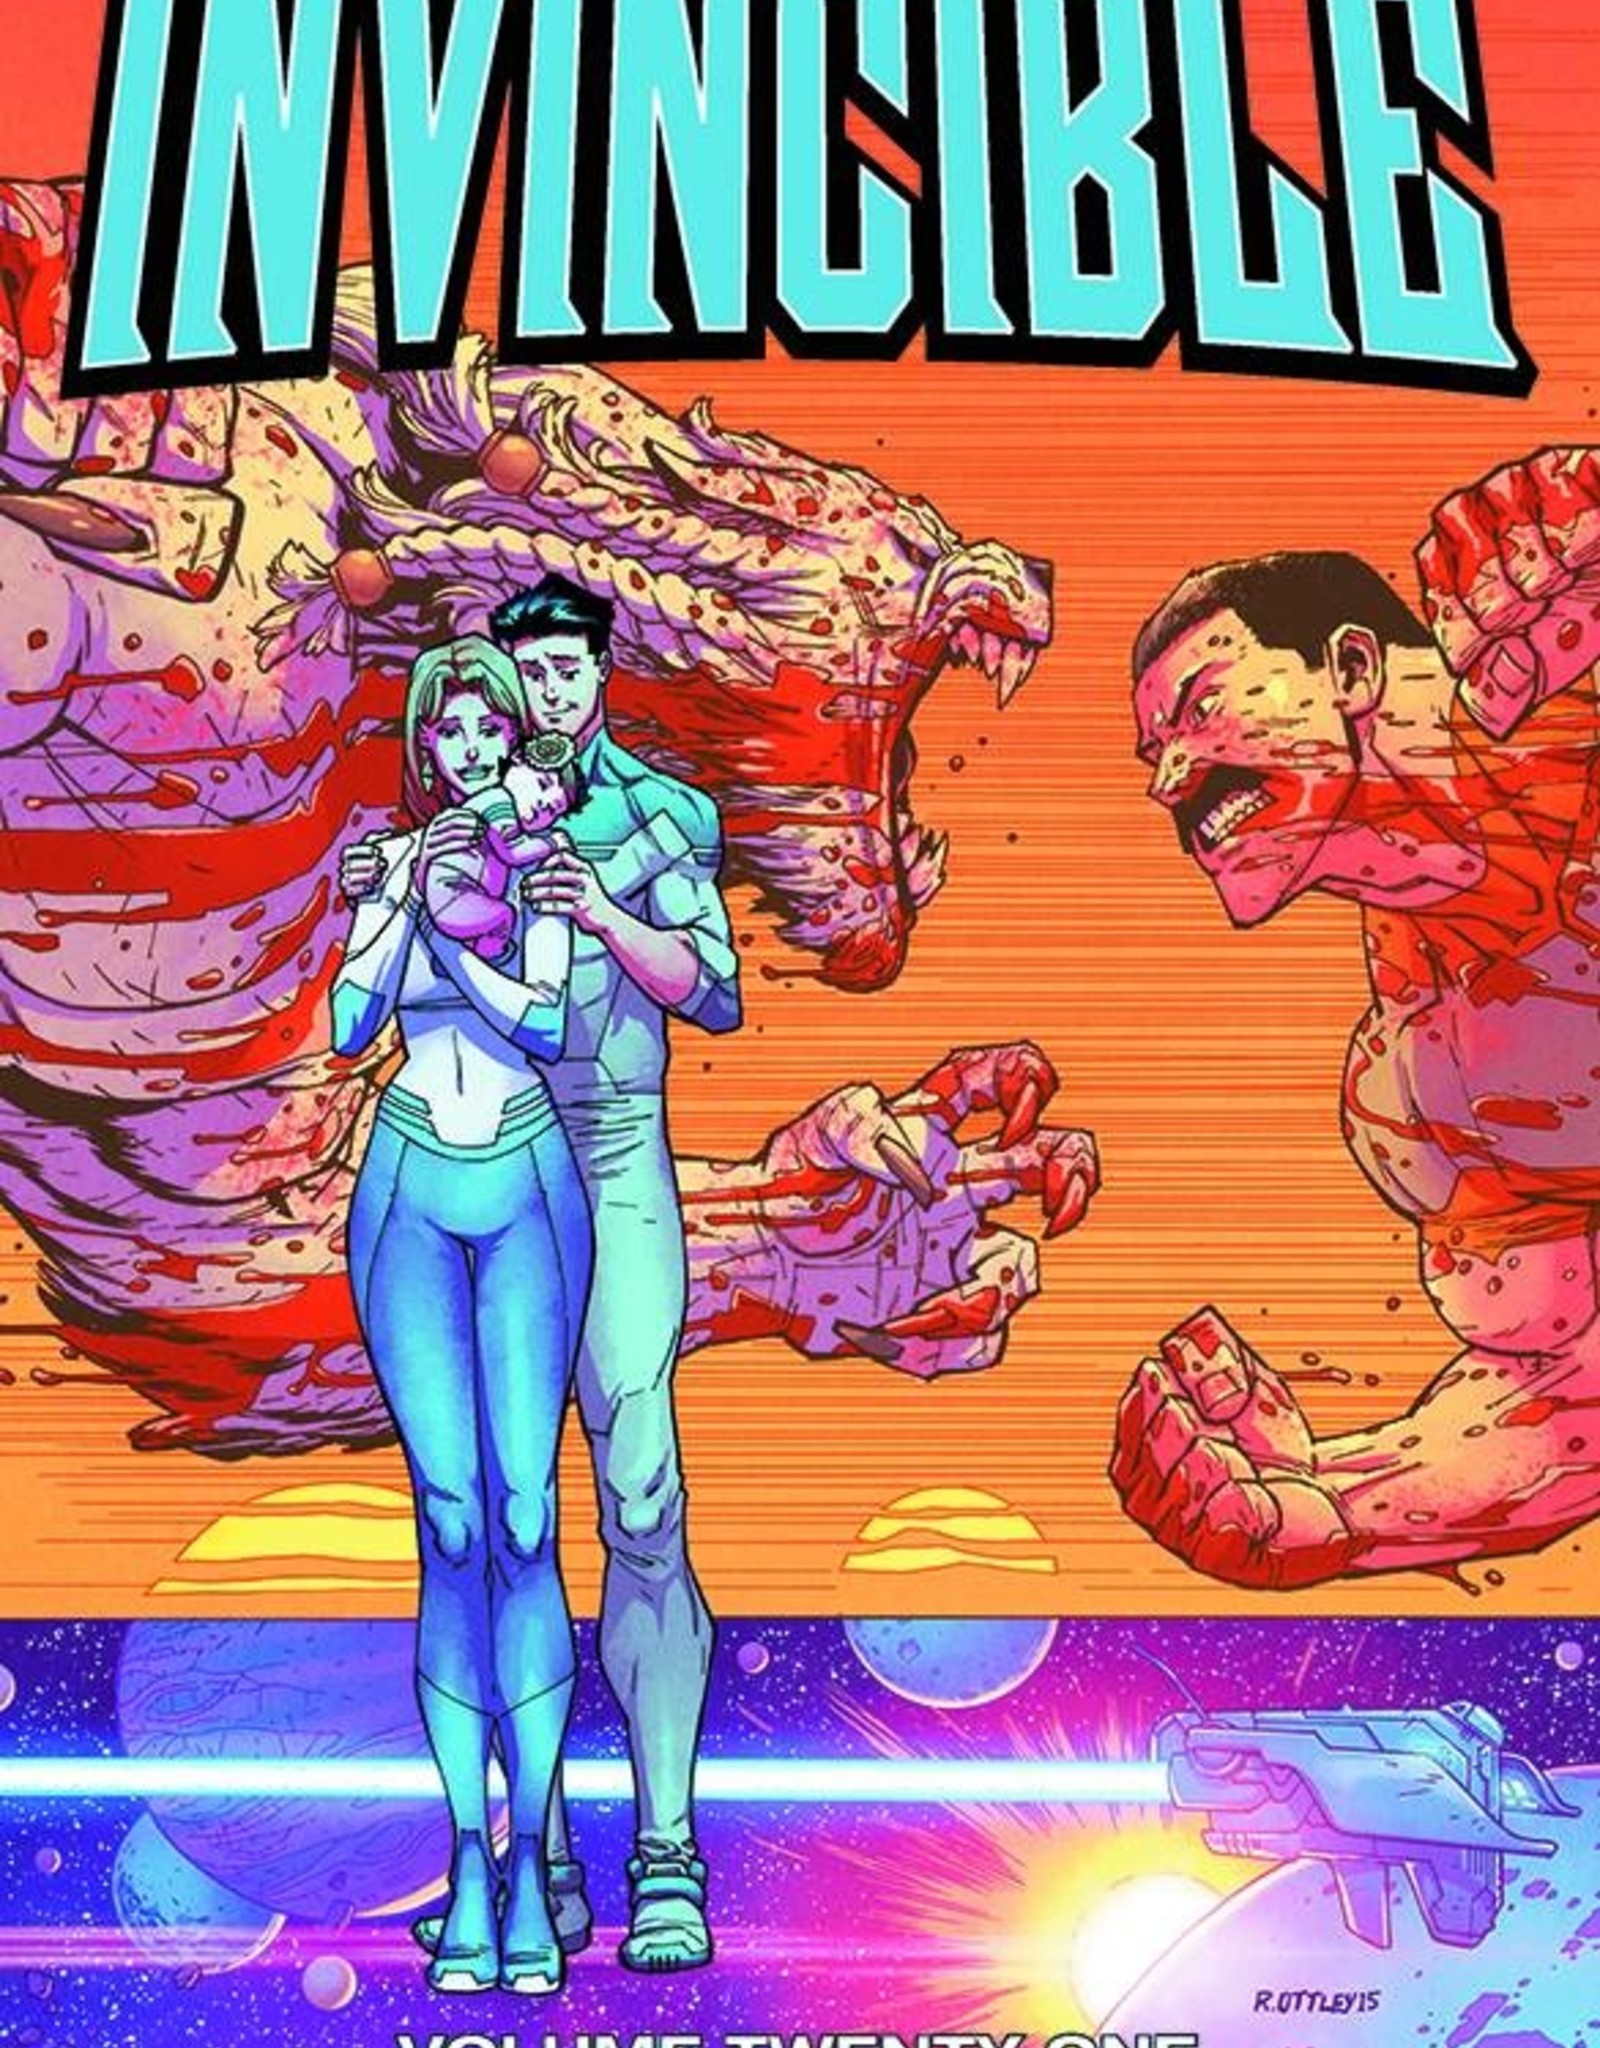 Image Comics Invincible TP Volume 21 Modern Family